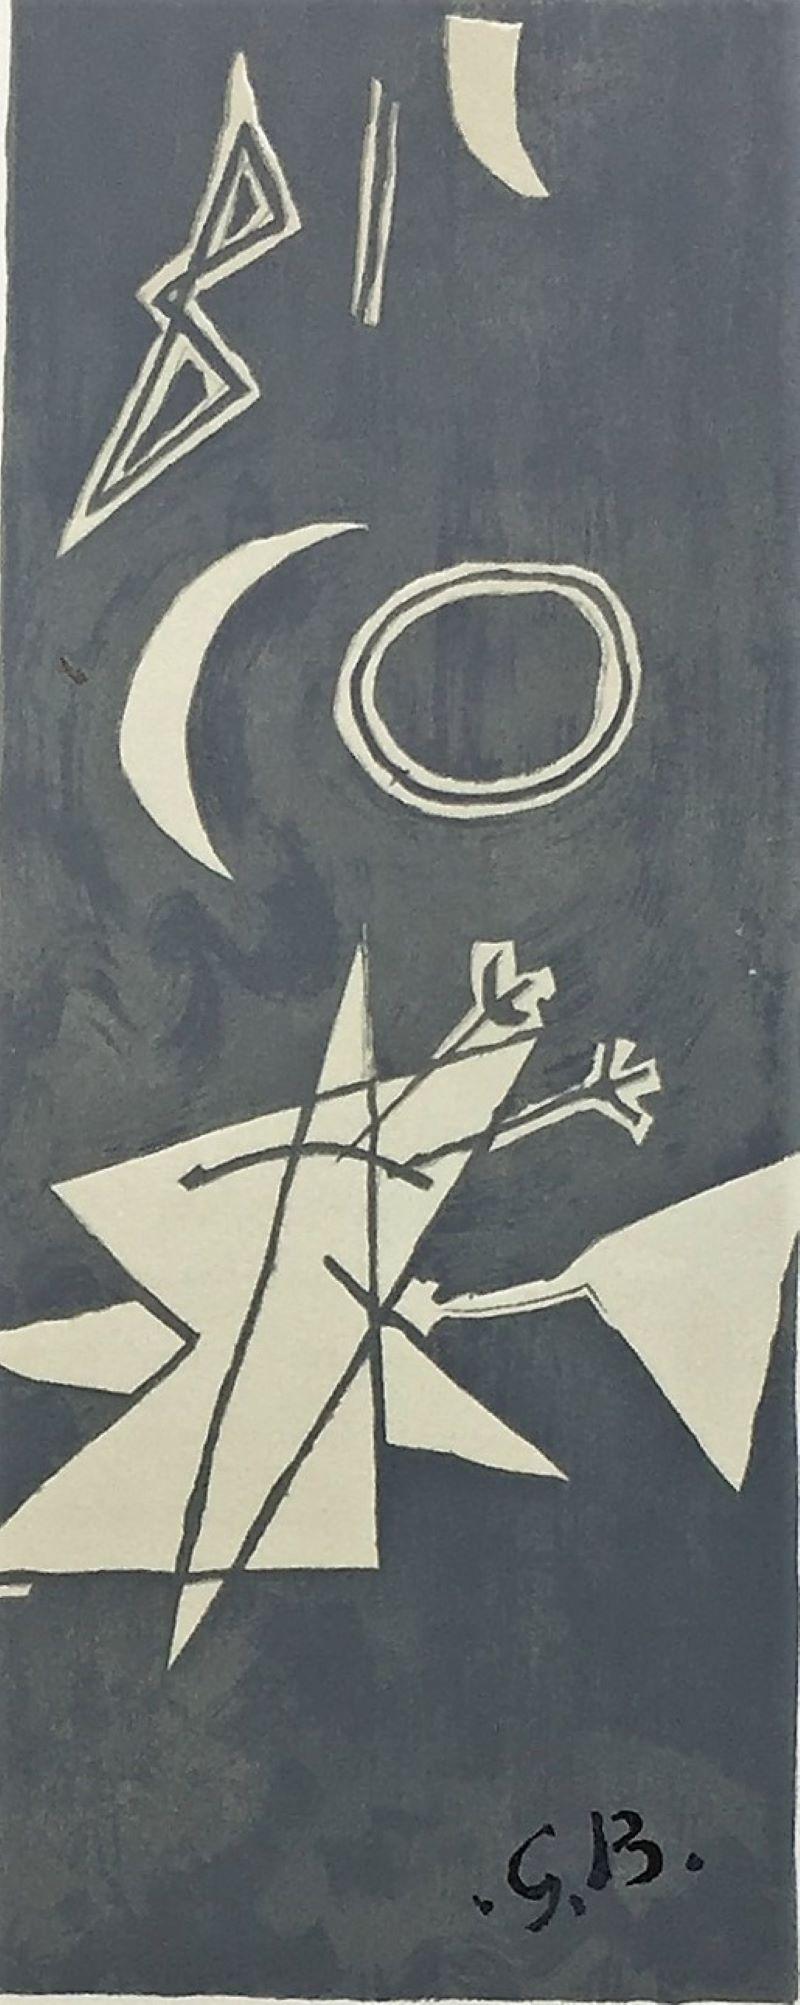 (after) Georges Braque Abstract Print - Ciel Gris II (Grey Sky II)